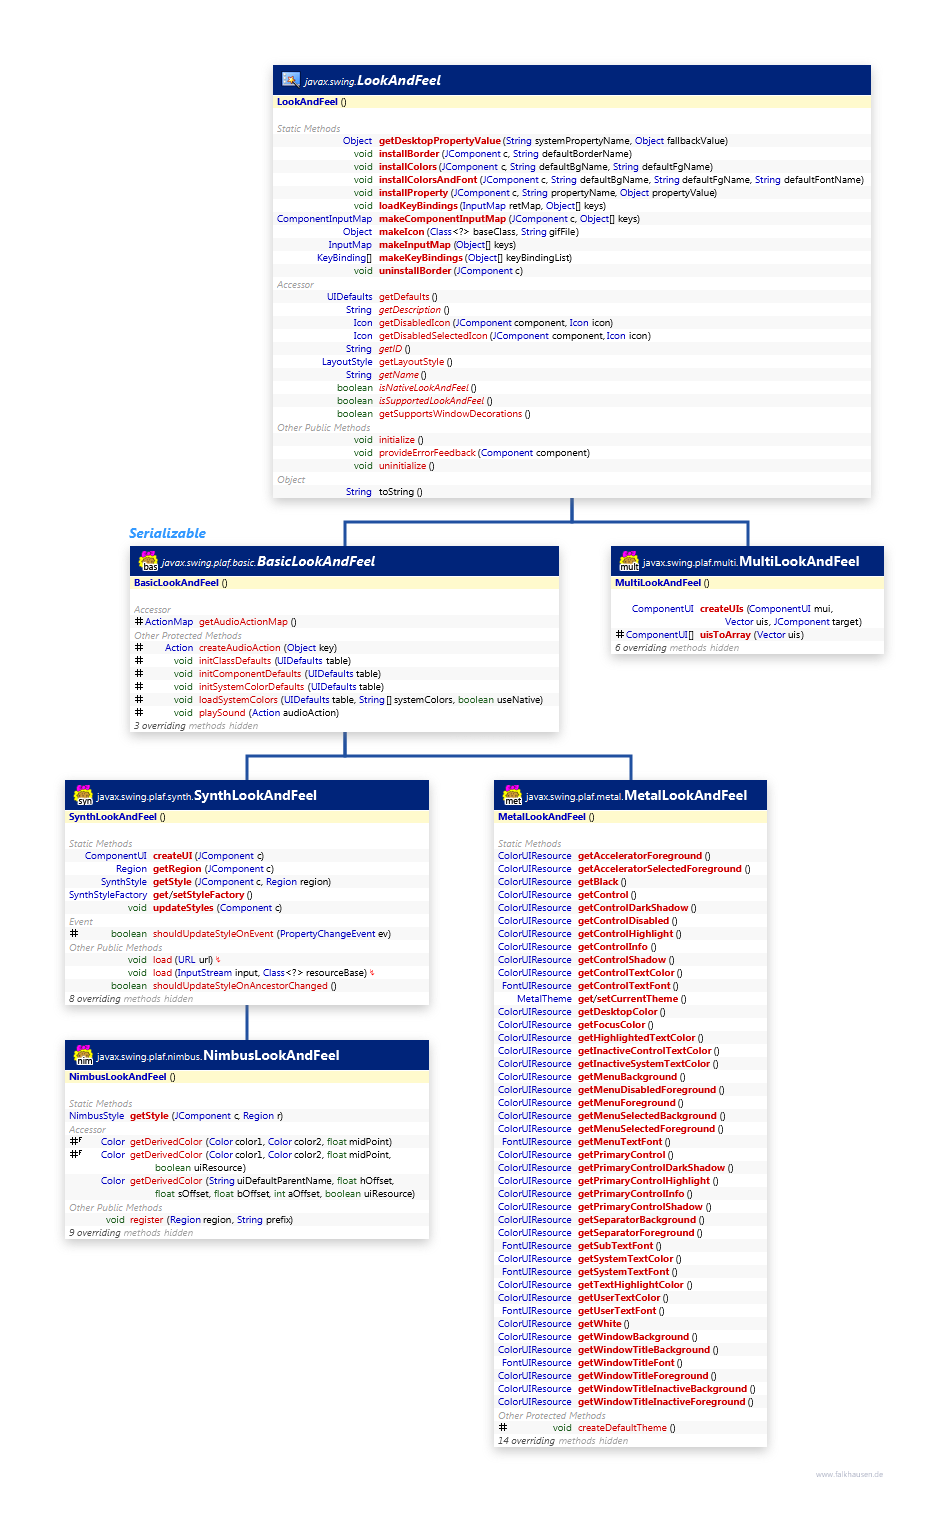 LookAndFeel class diagram and api documentation for Java 8